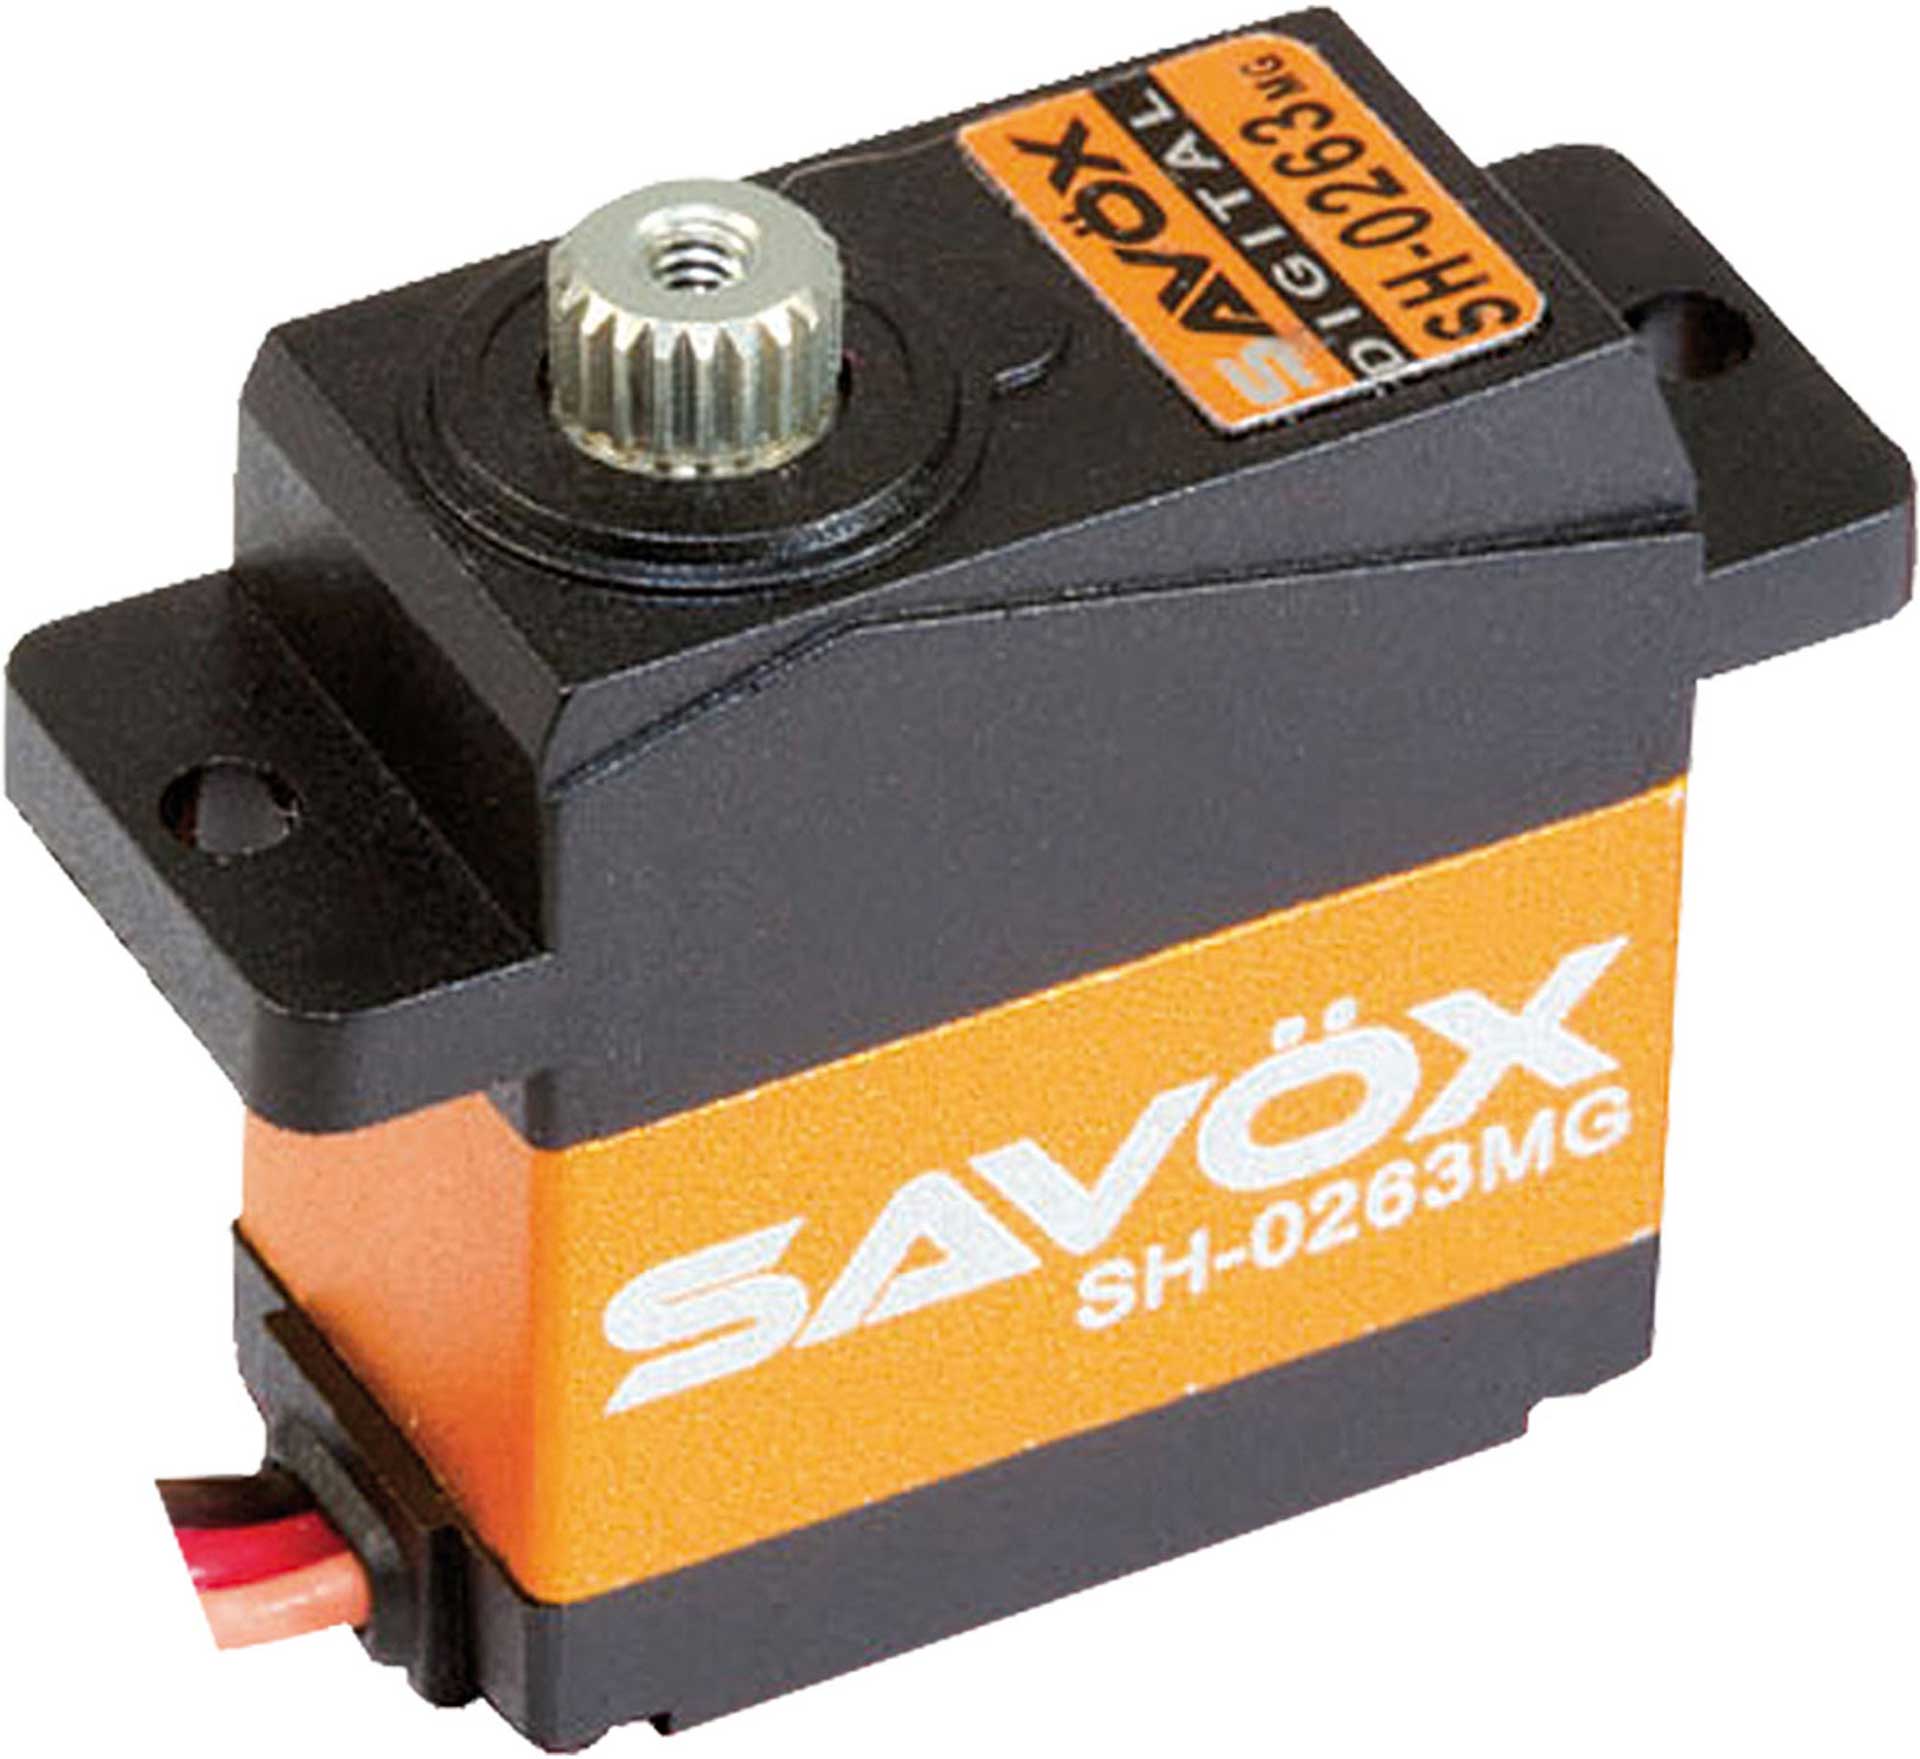 SAVÖX SH-0263MG (6V/2,2KG/0,10s) DIGITAL SERVO